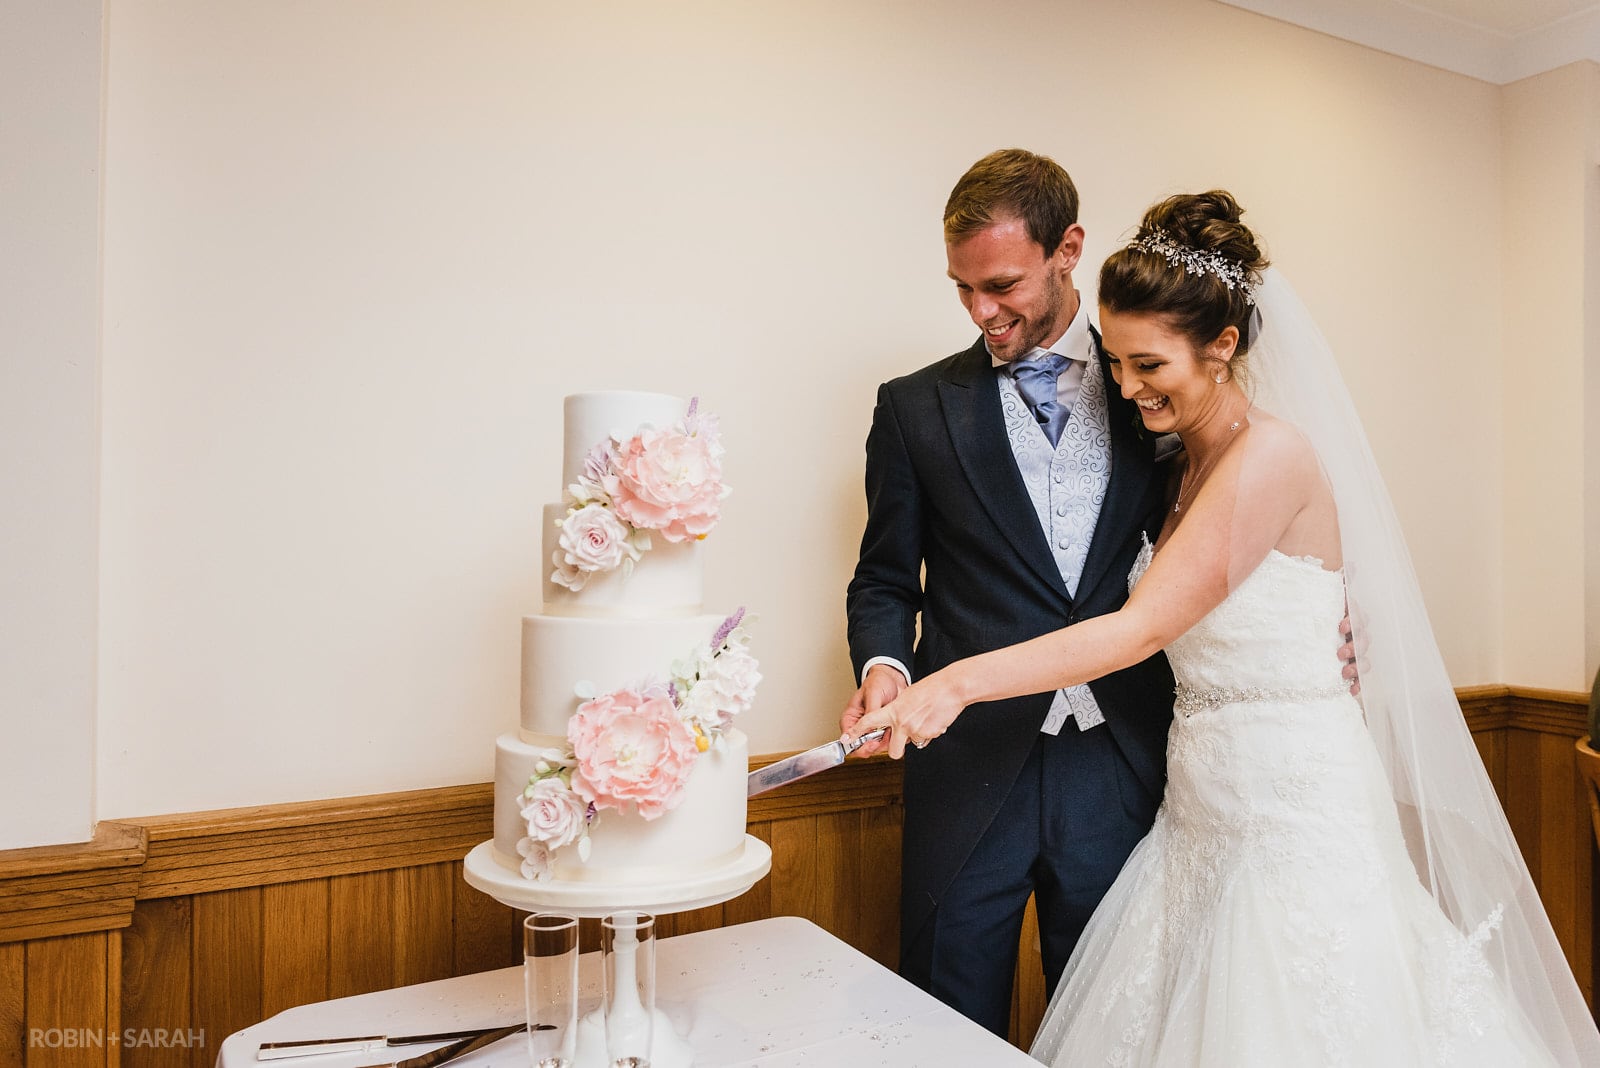 Bride and groom cut wedding cake at Delbury Hall